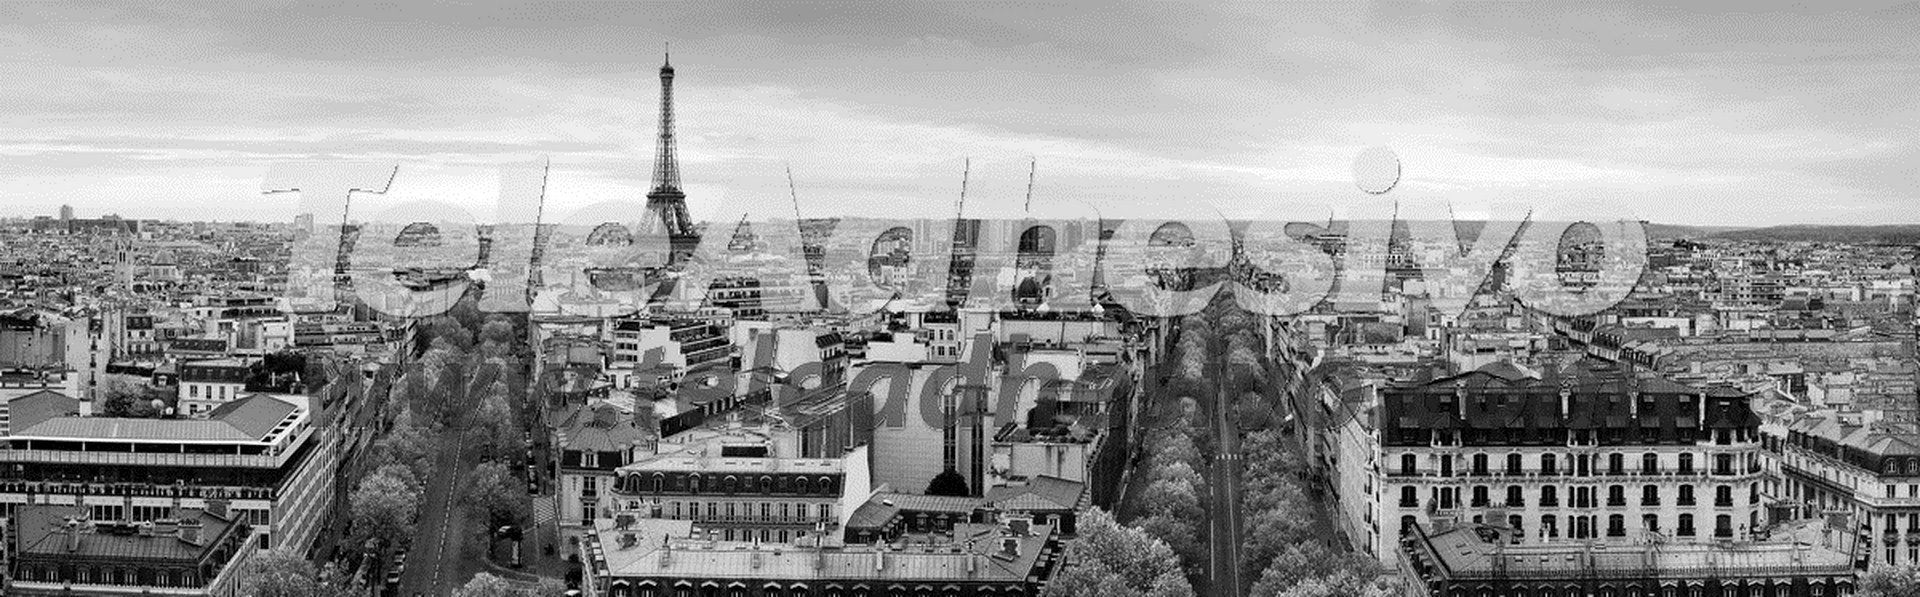 Fotomurali : Panoramica di Parigi in bianco e nero